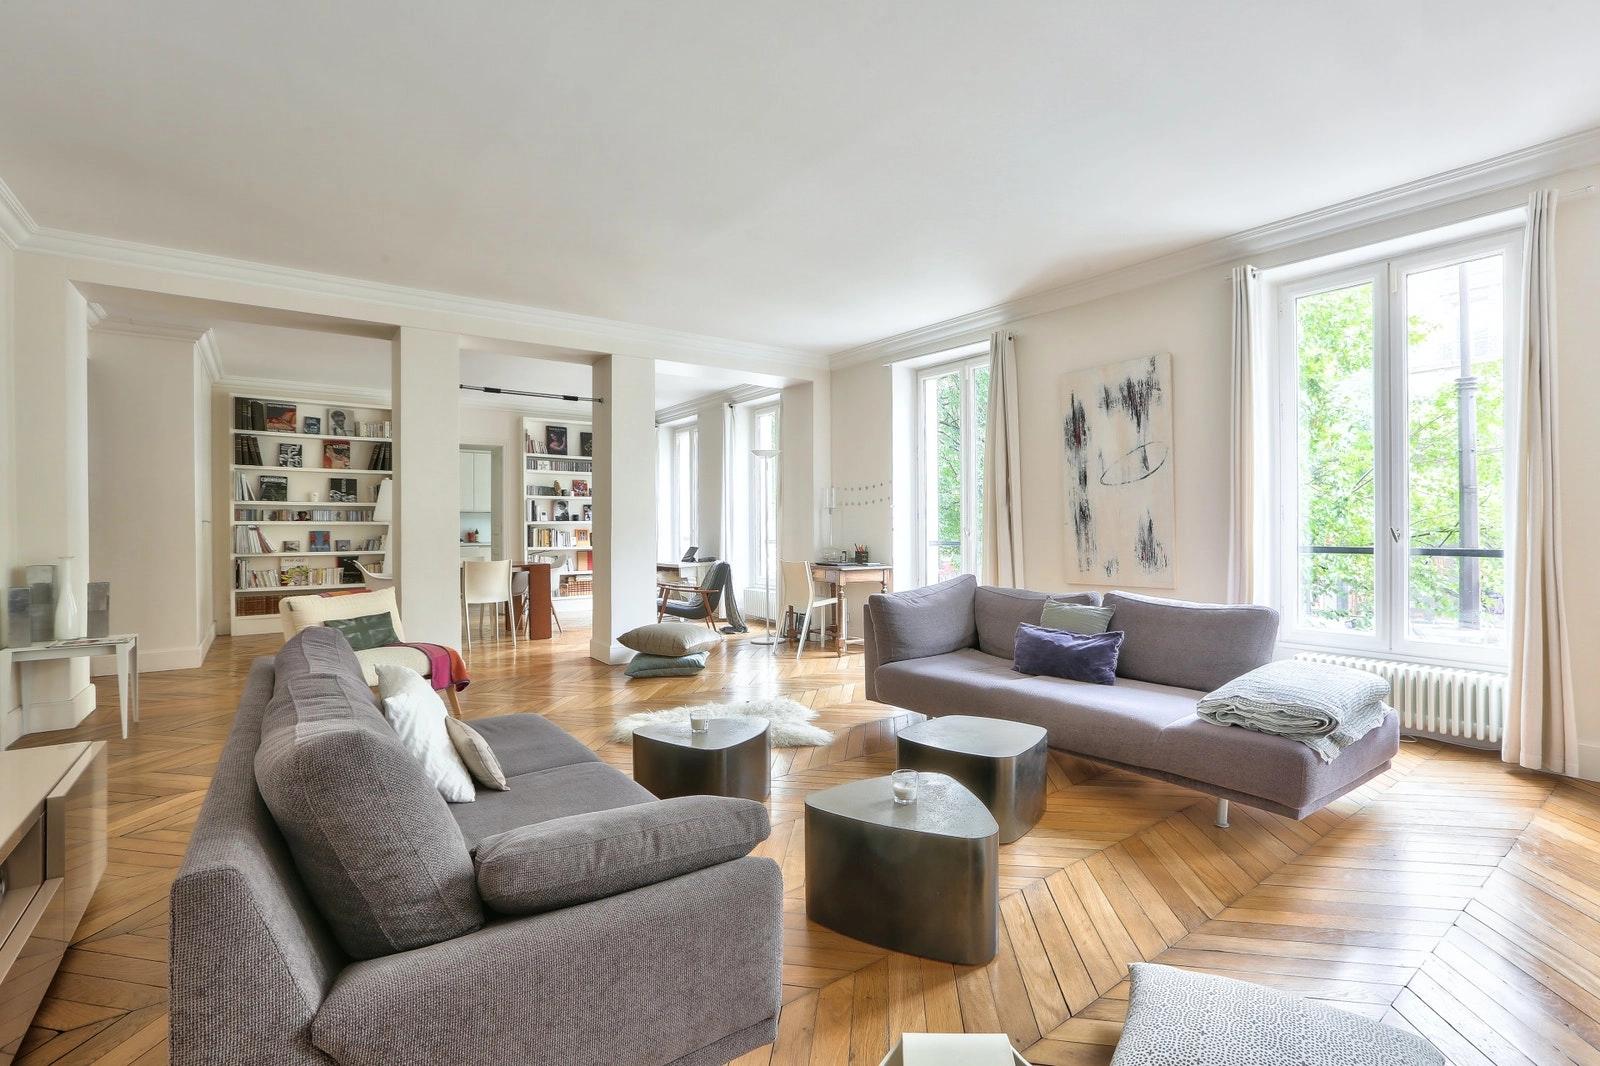 Sala dentro Preciosa, luminosa y cálida casa contemporánea de estilo Haussmann - 5